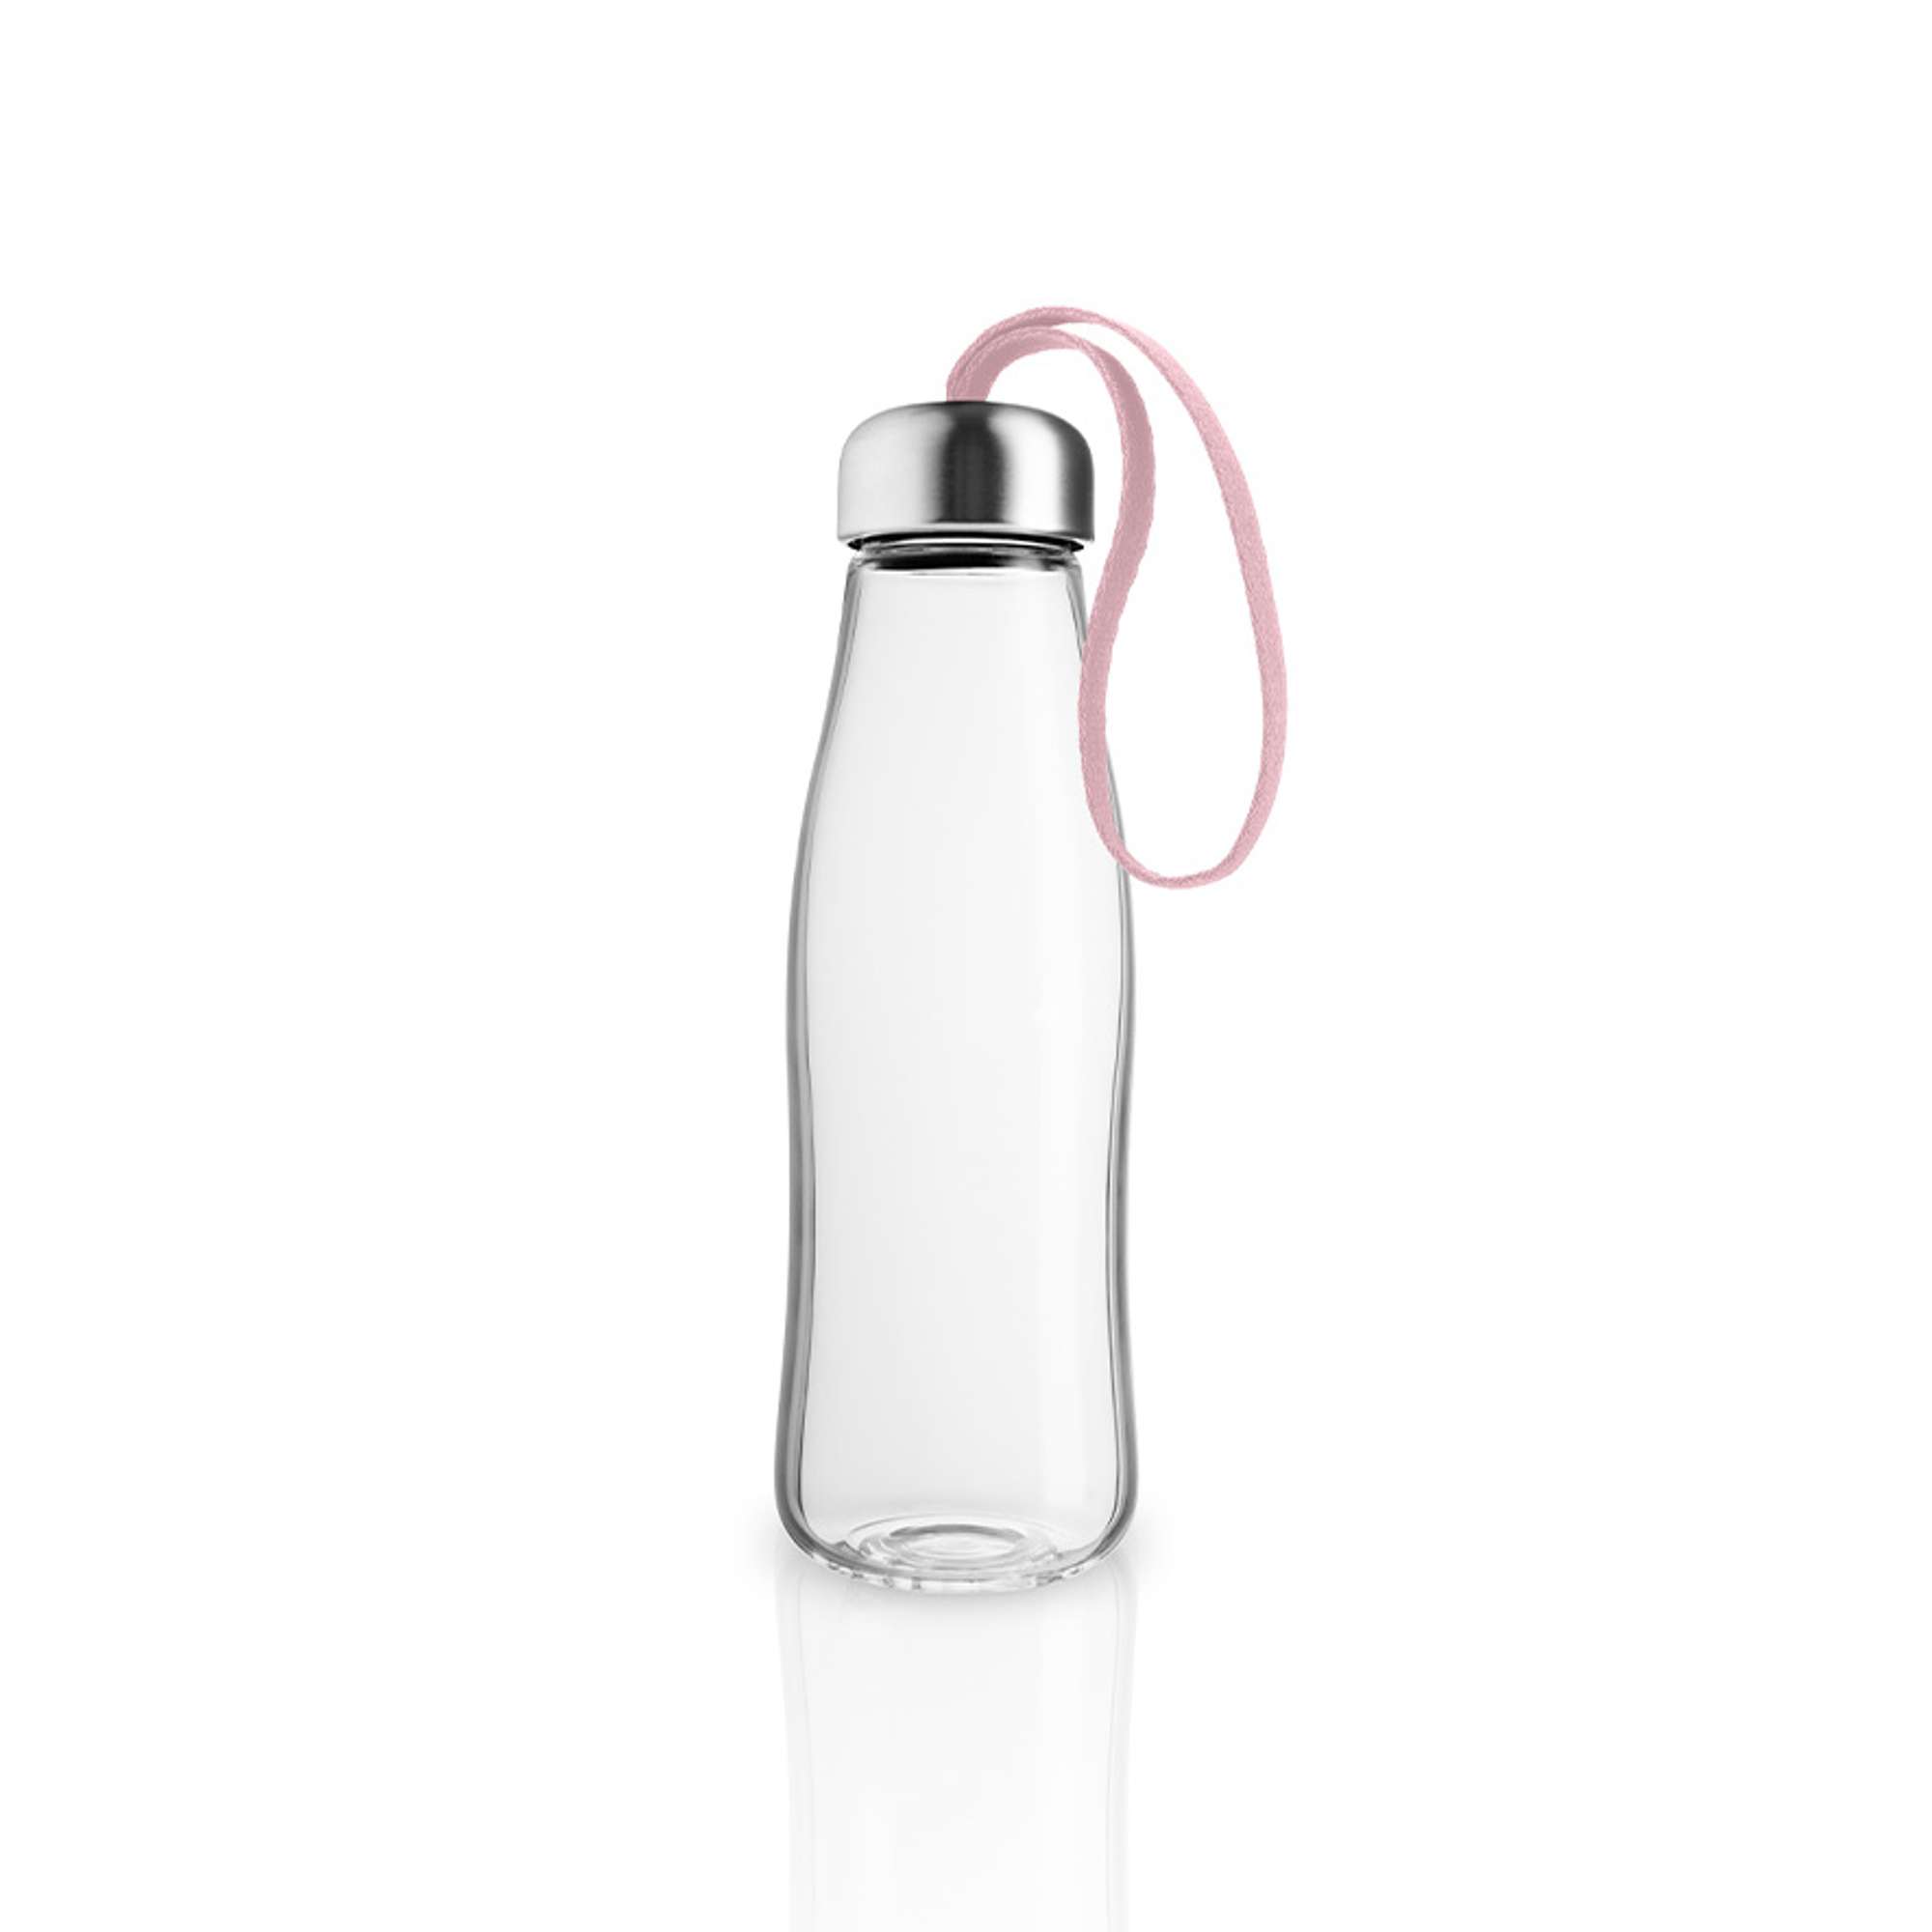 Glasdrikkeflaske - 0,5 liter - Rose quartz